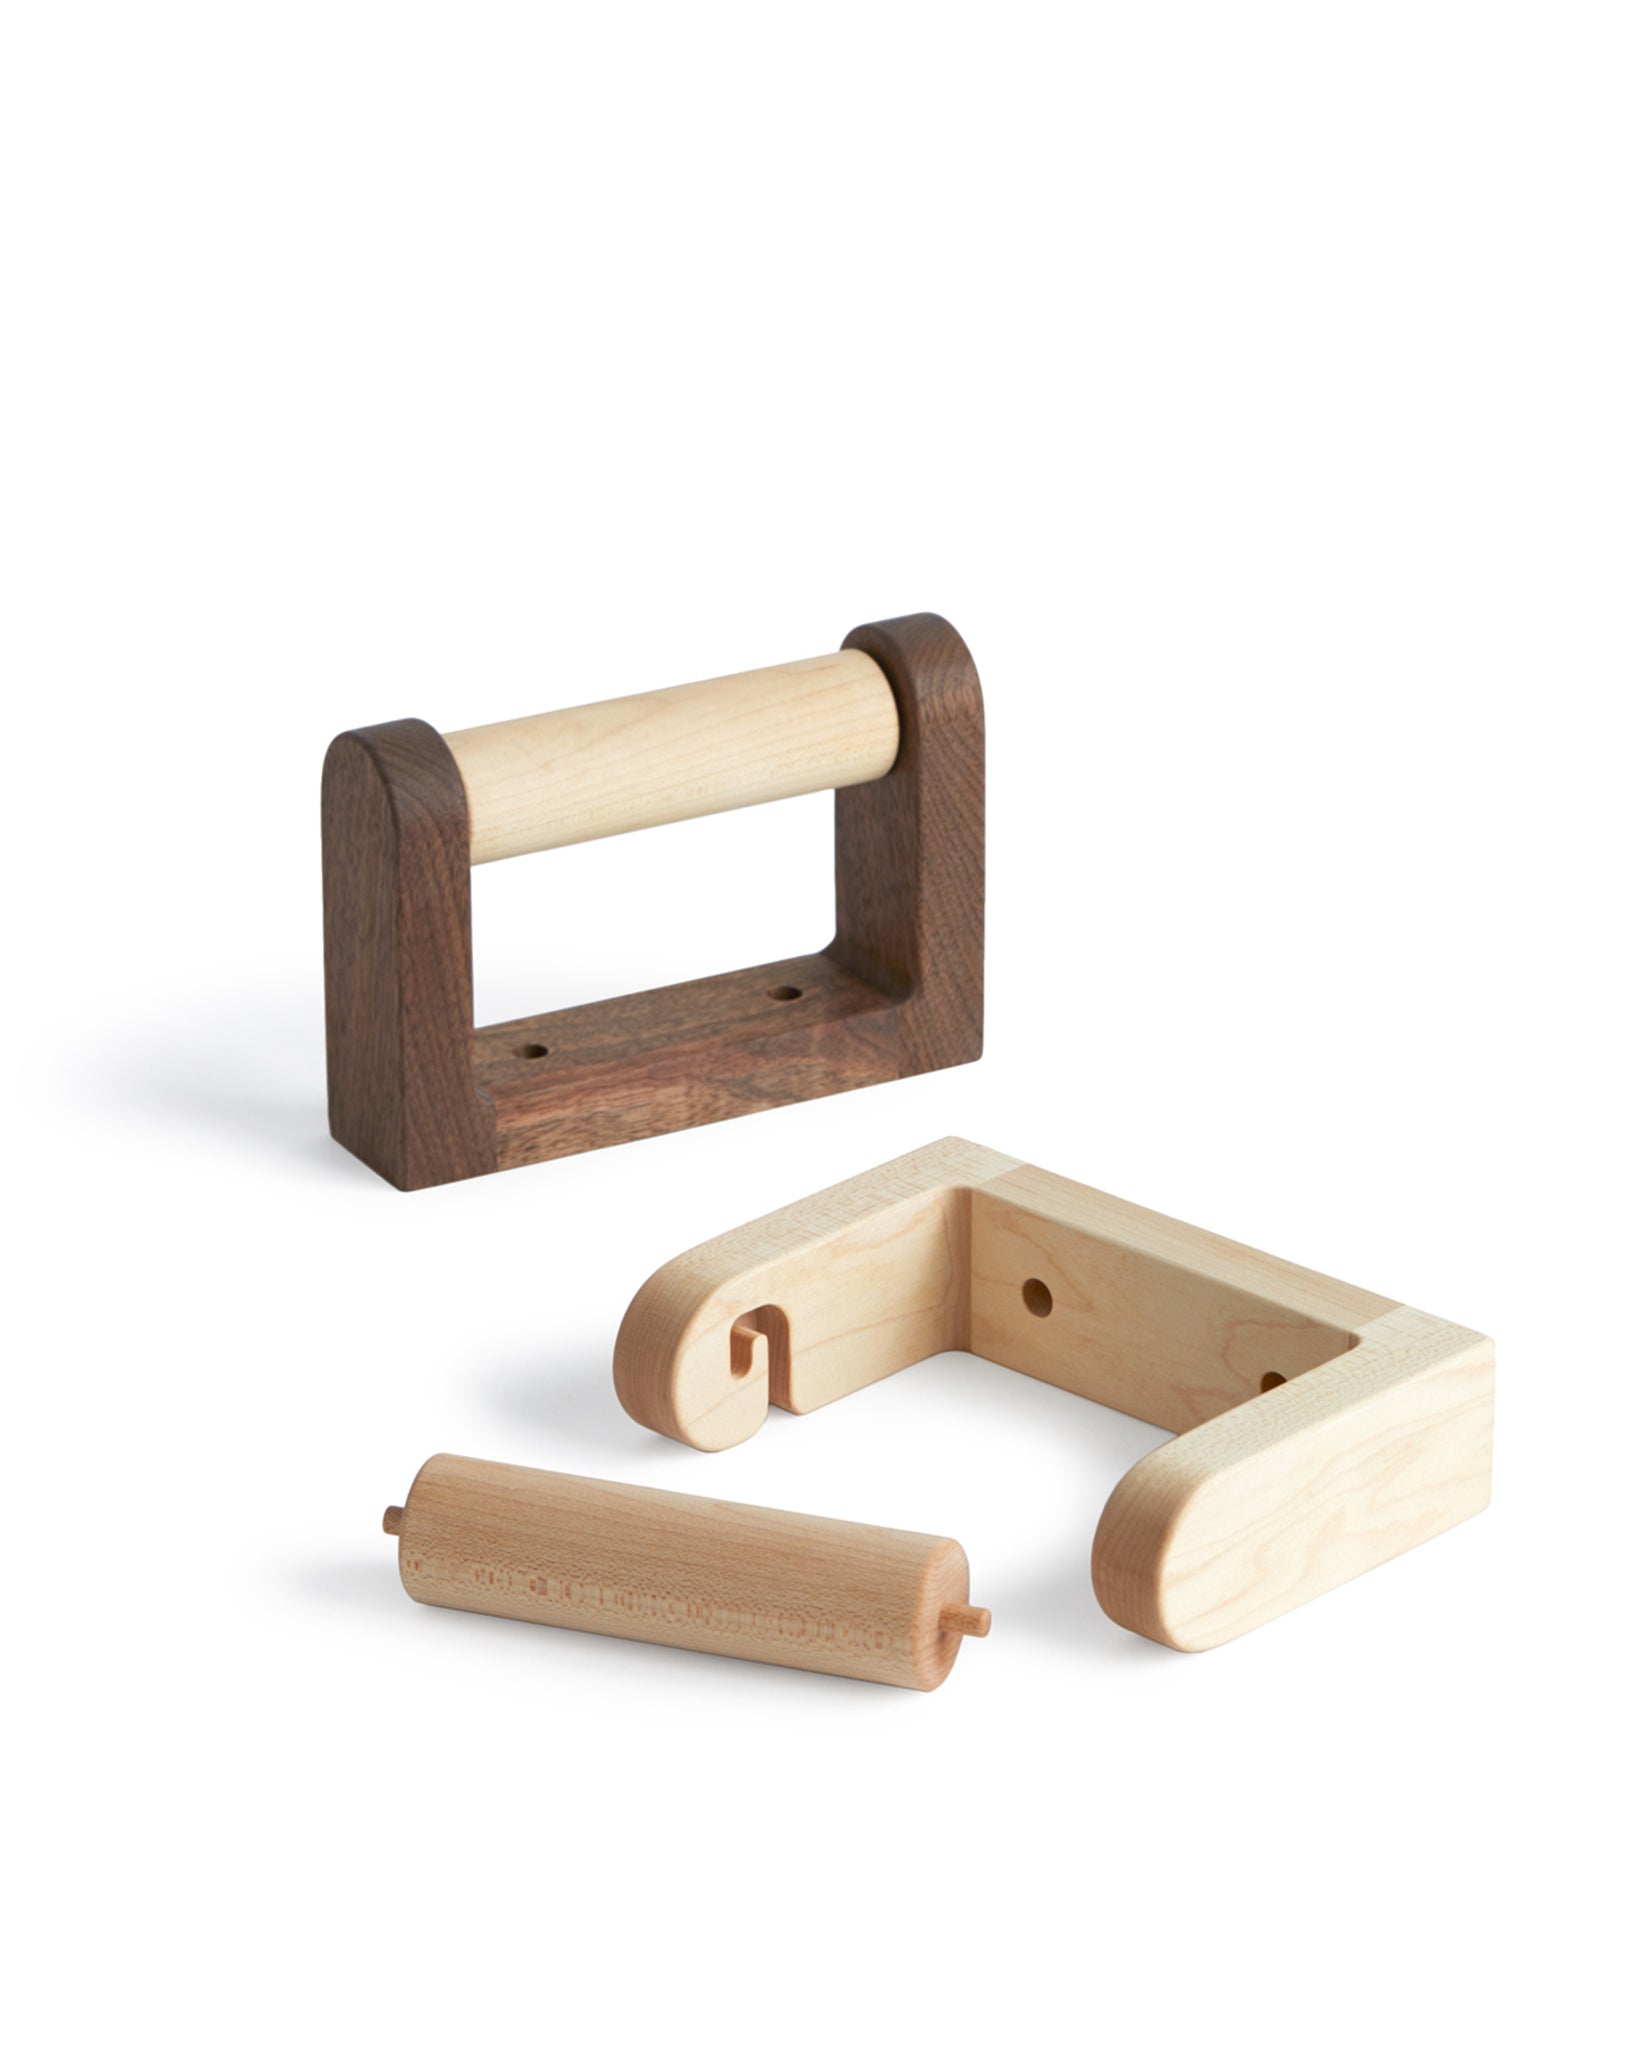 Maple and Walnut Wood toilet paper holder designed by Makoto Koizumi